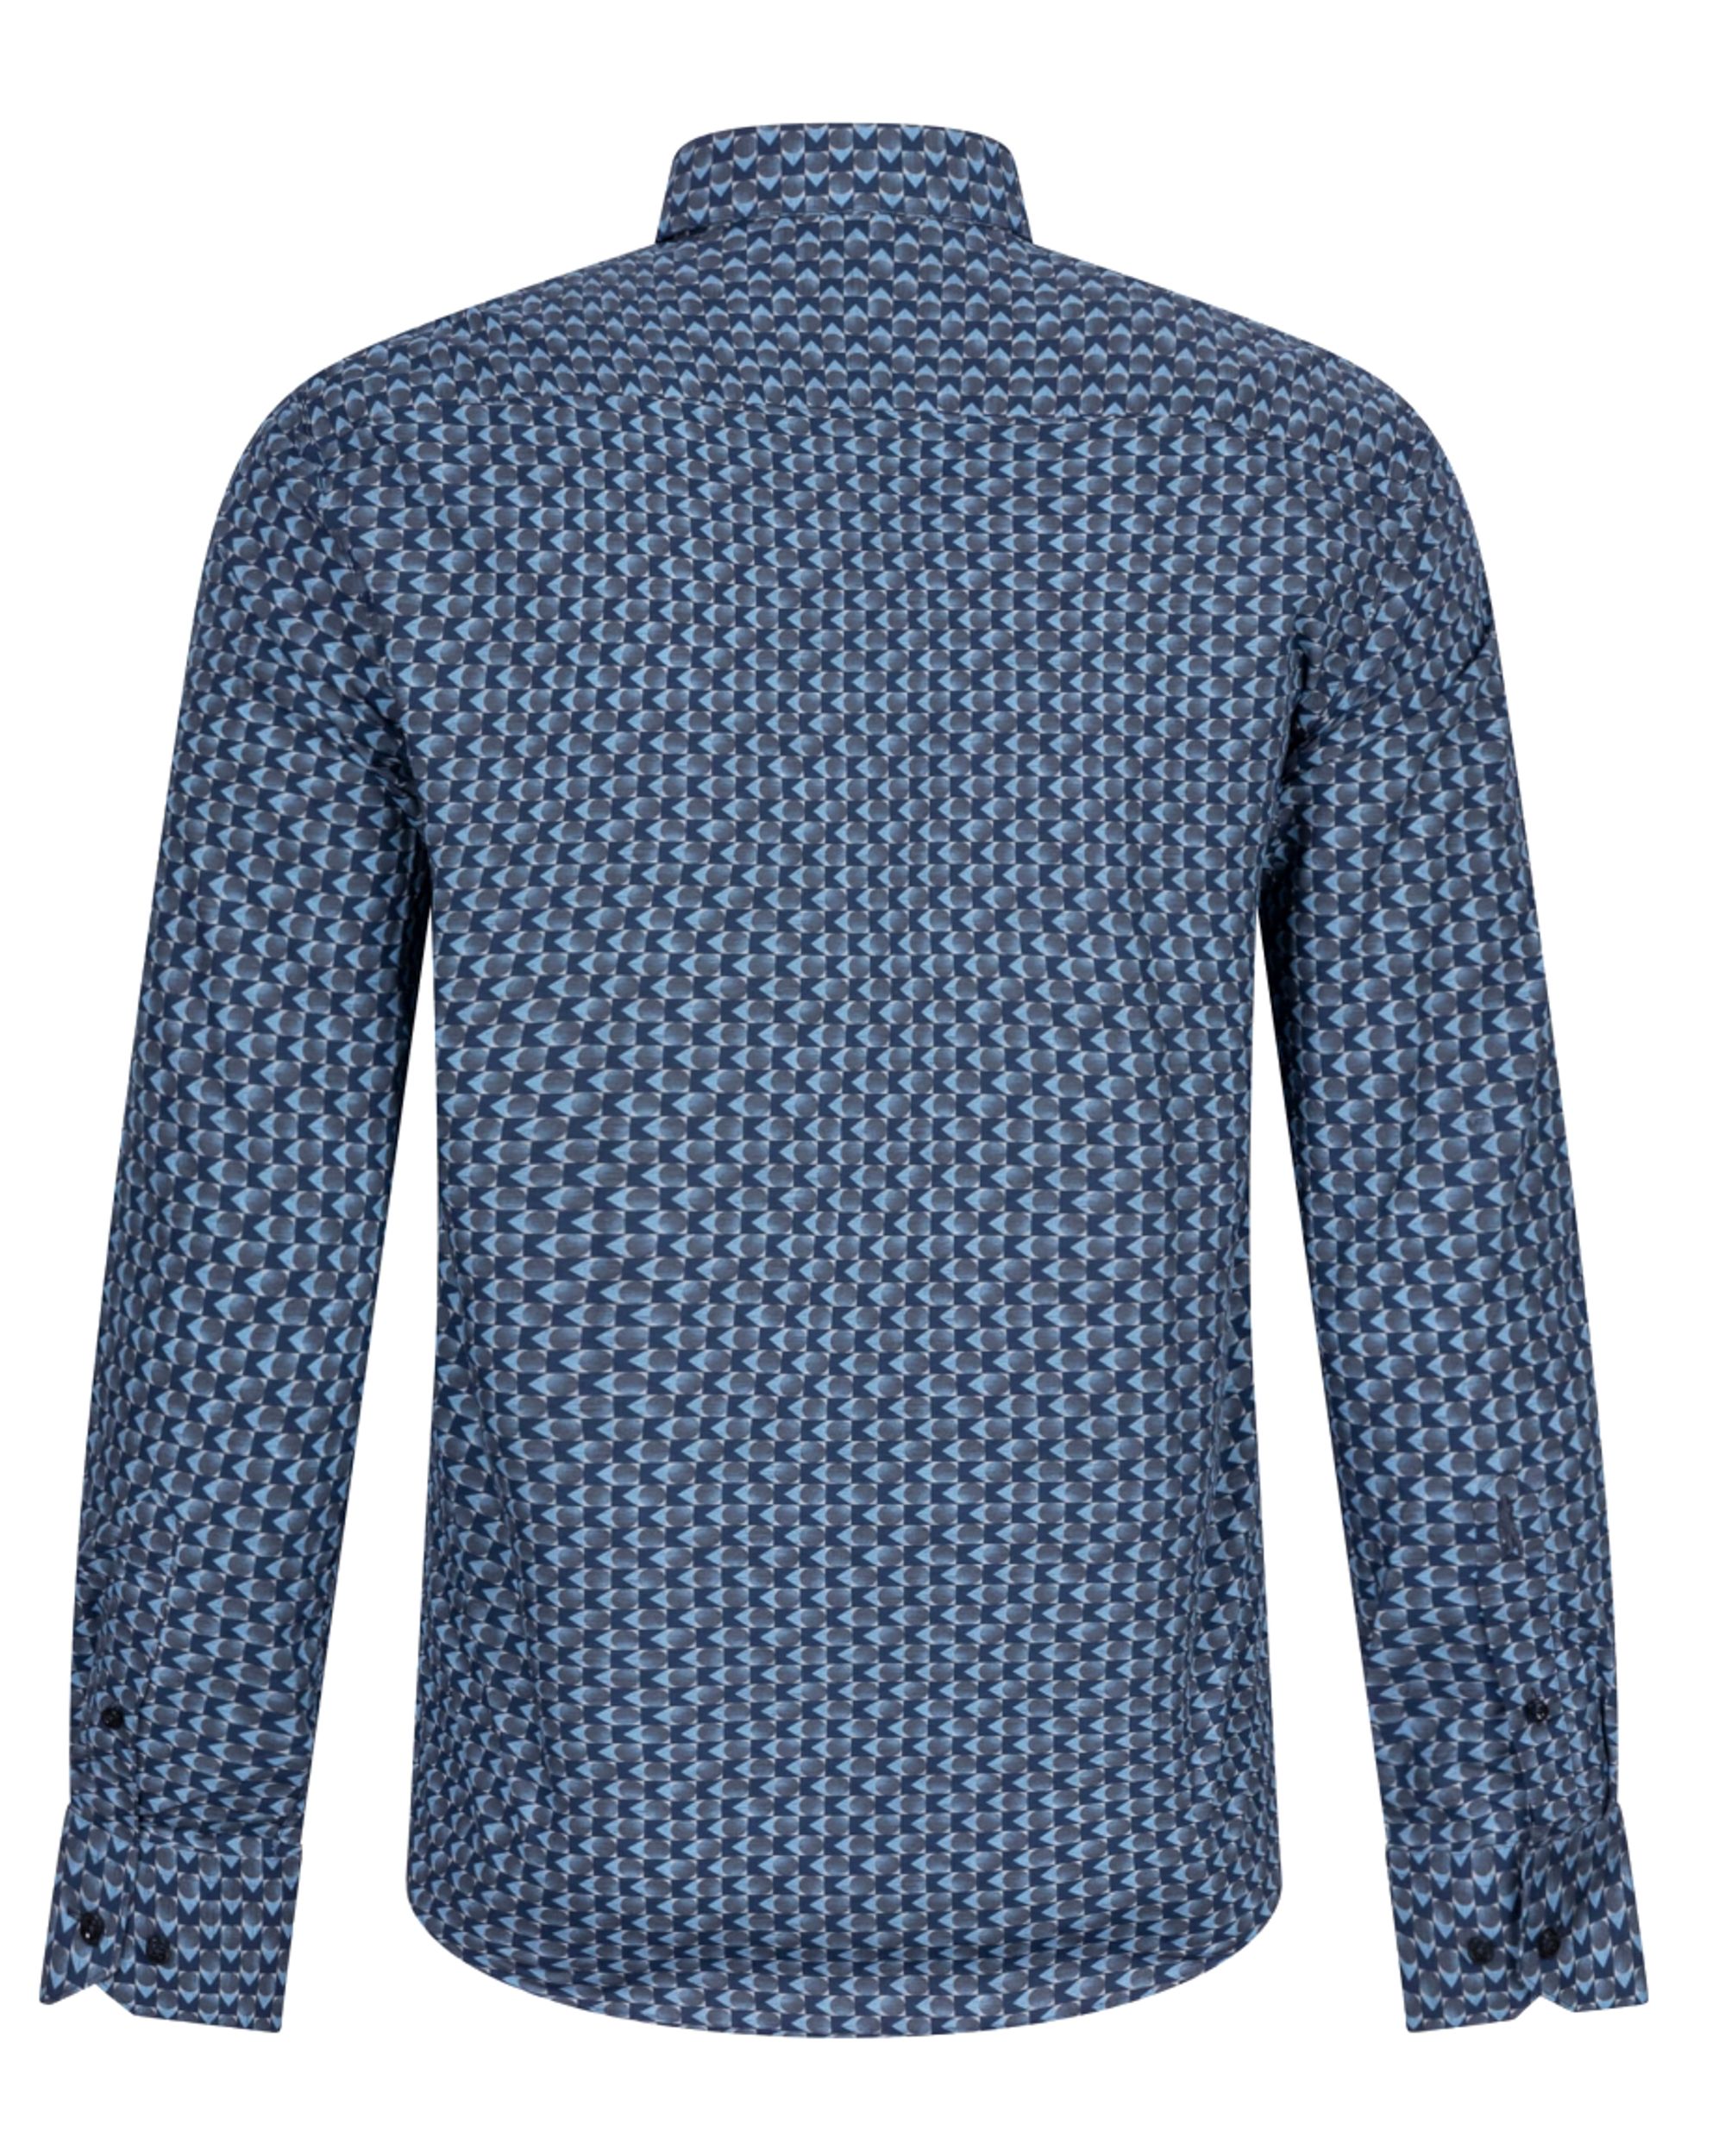 Cavallaro Casual Overhemd LM Donker blauw 091507-001-36